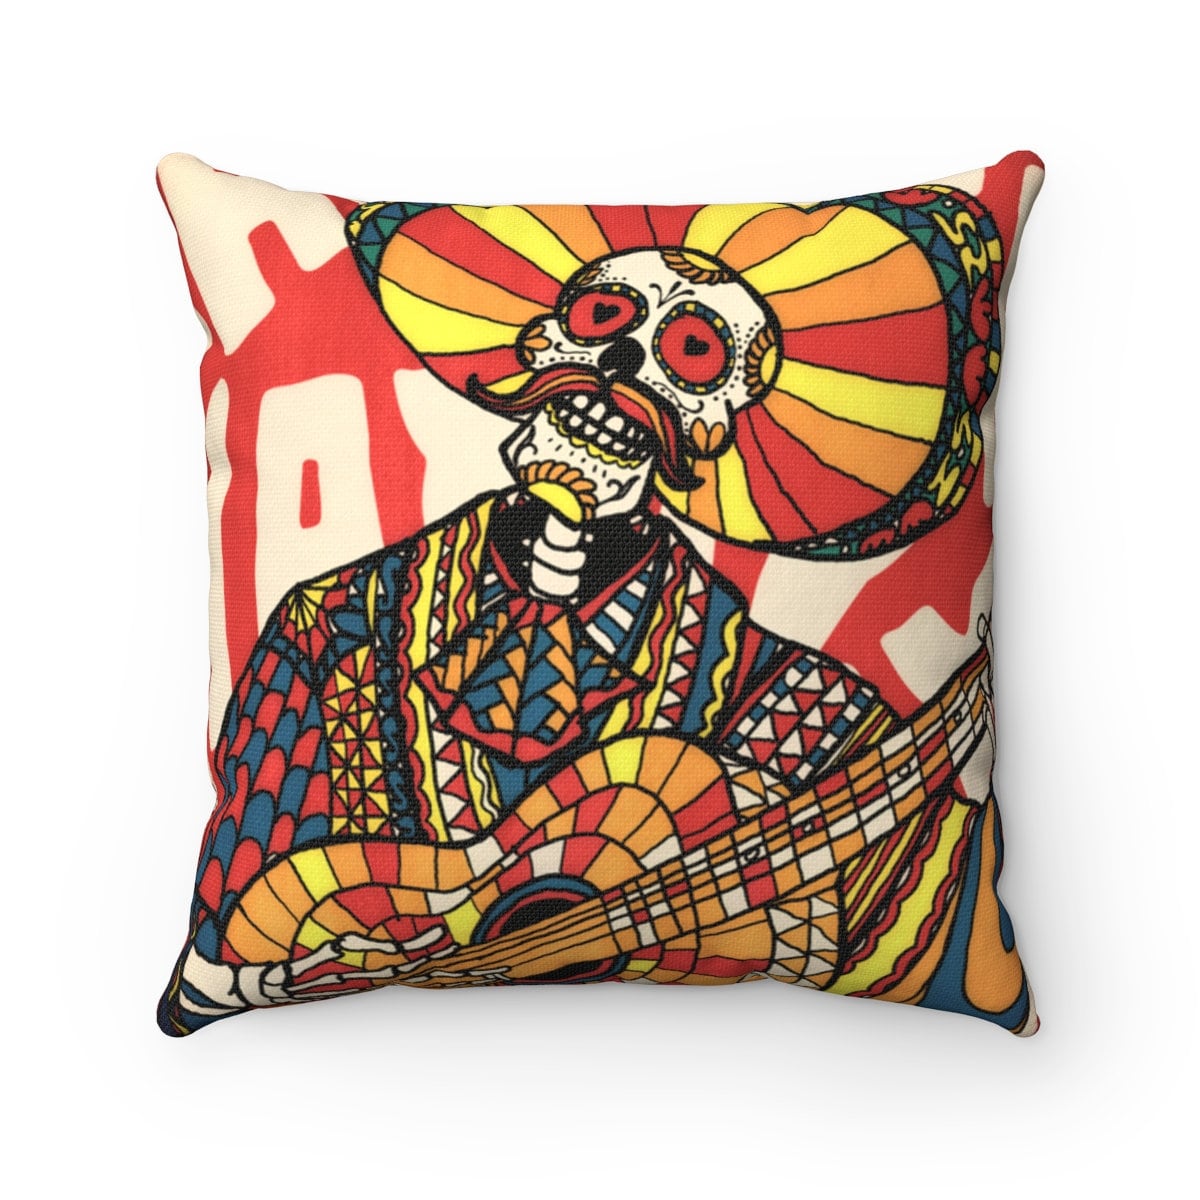 Mariachi Skull Throw Pillow, Mexican Skull Spun Polyester Square Pillow, Gothic Sugar Skull Home Decor, Colorful Skull Pillow Decor Gift